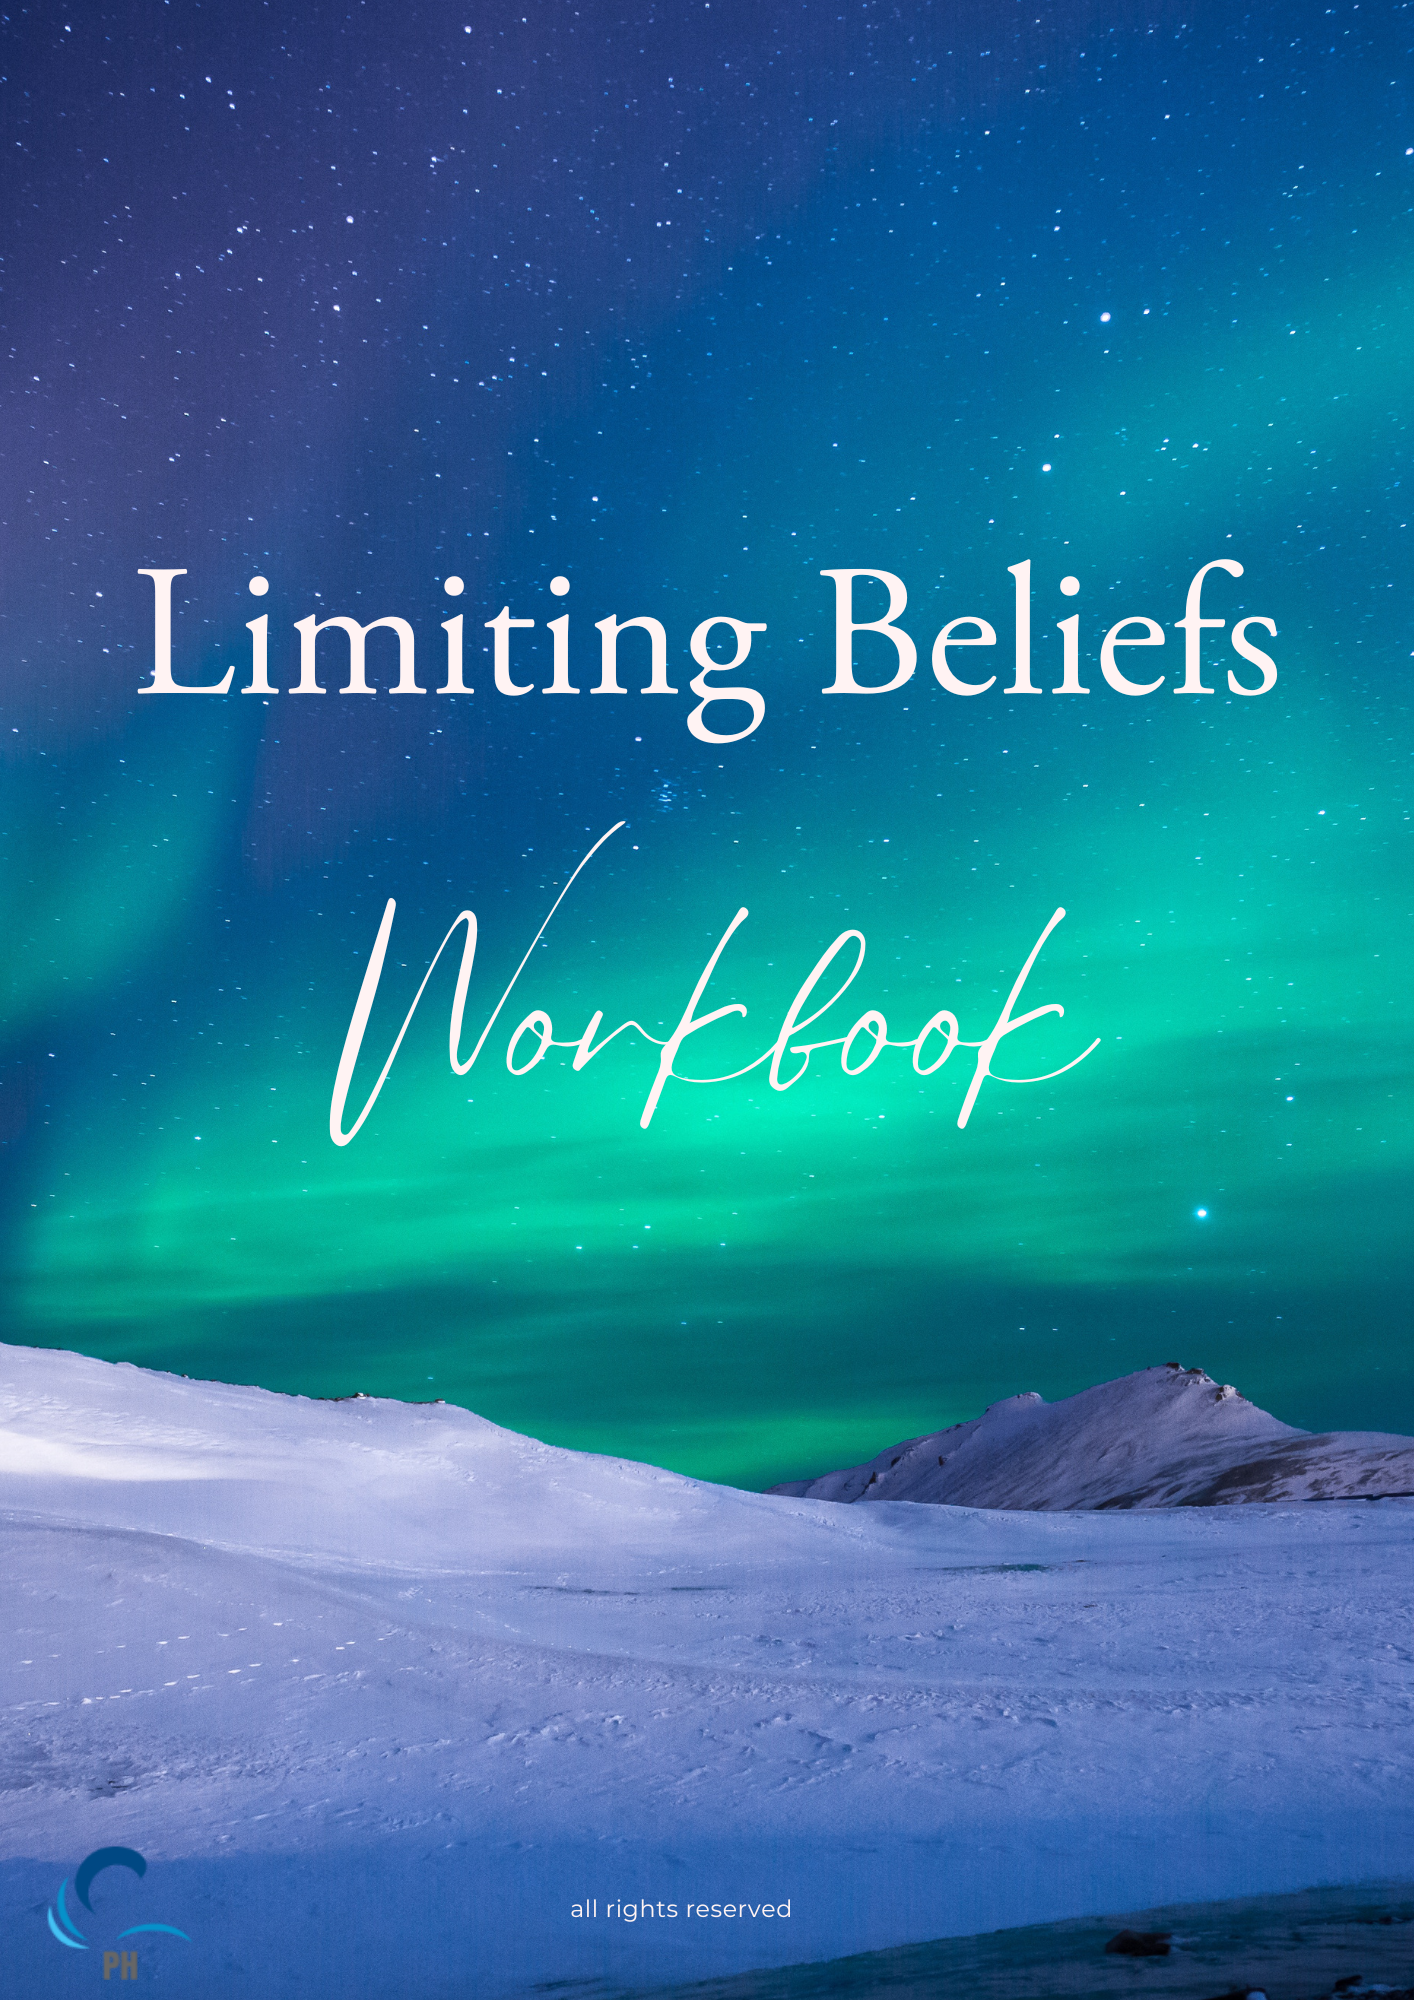 Limiting Beliefs Workbook